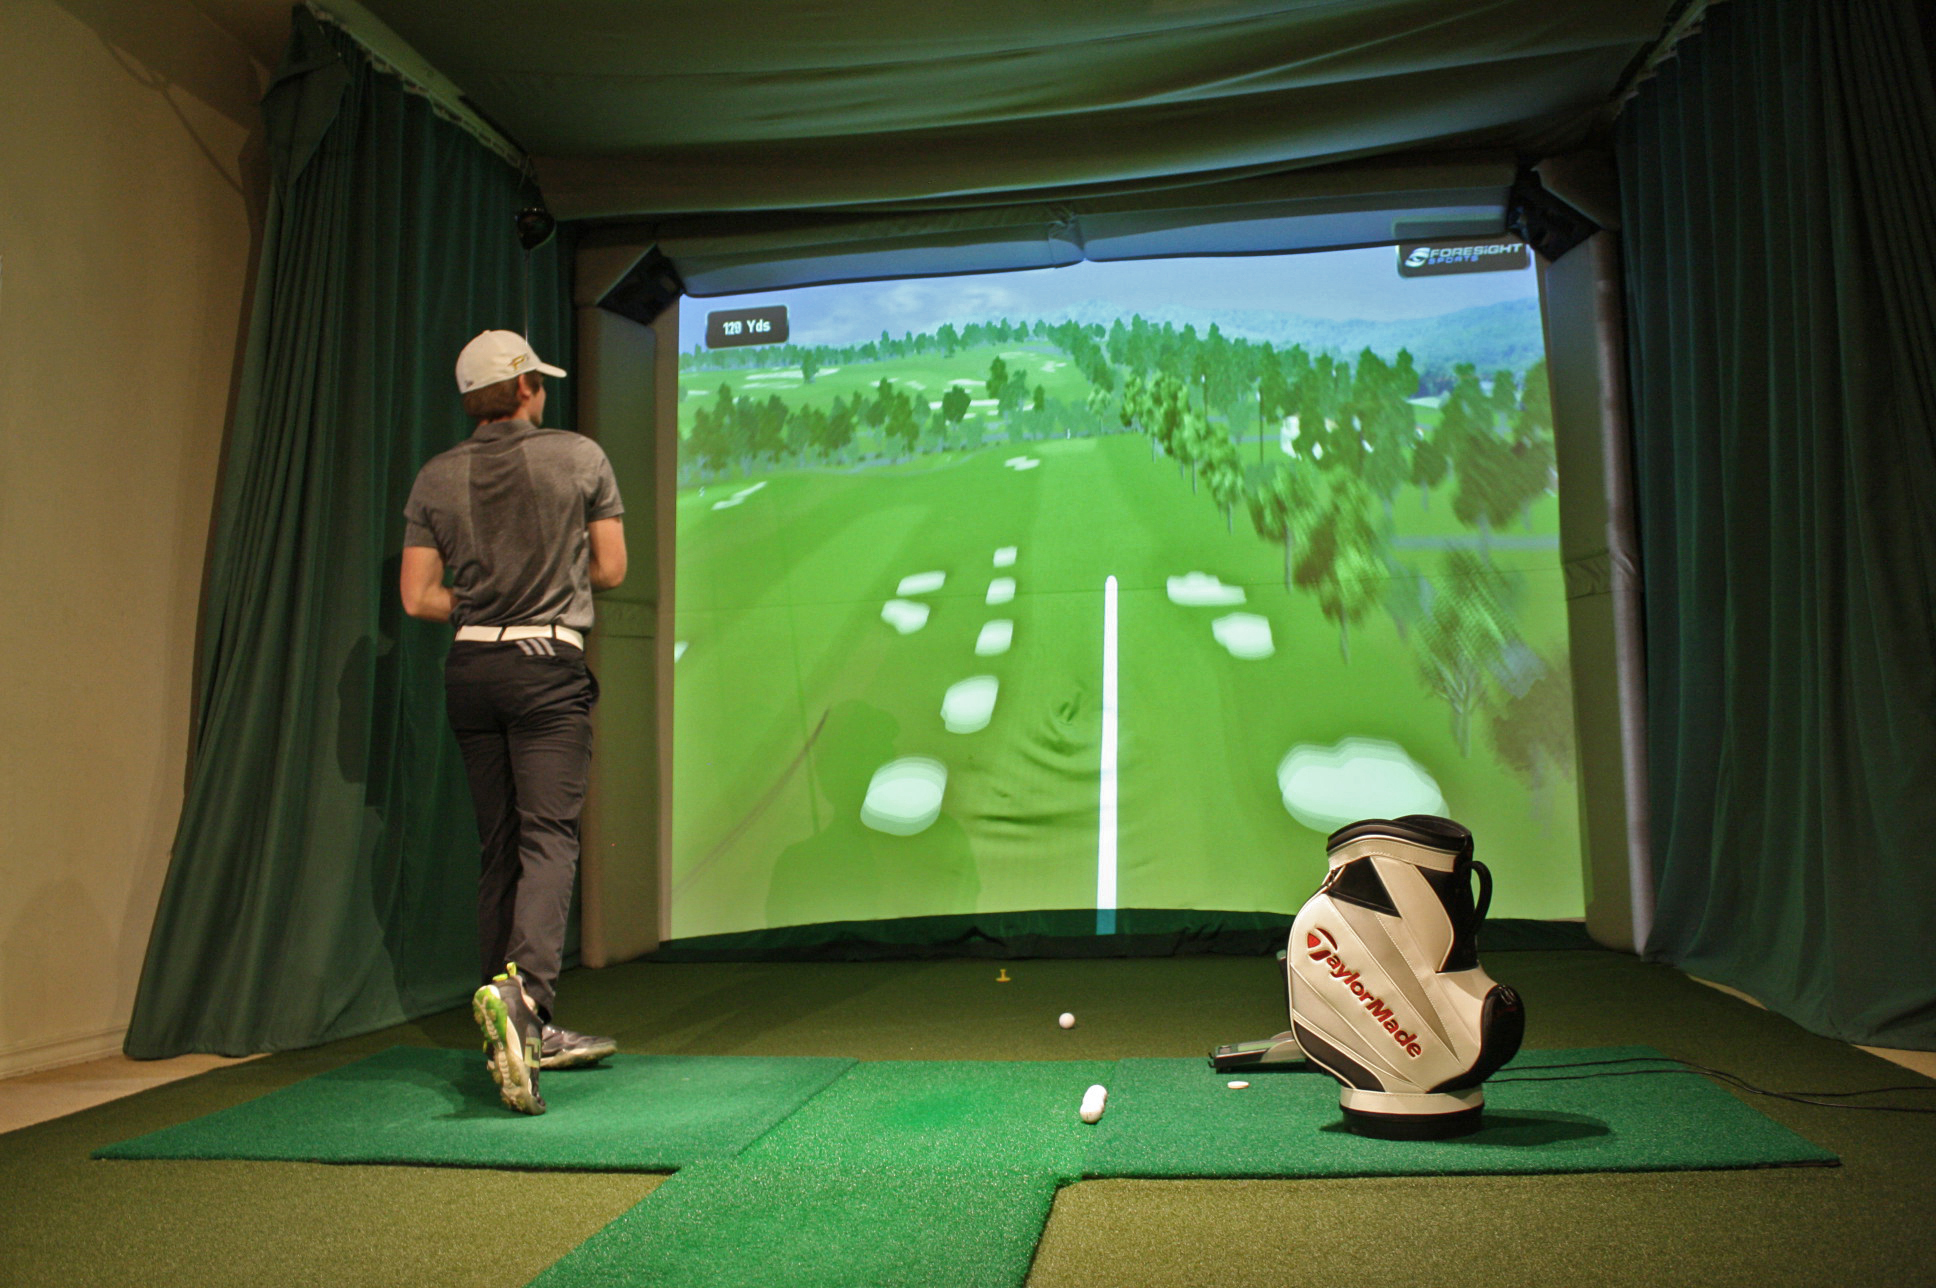 back-9-golf-academy-sim-demo-during-lesson